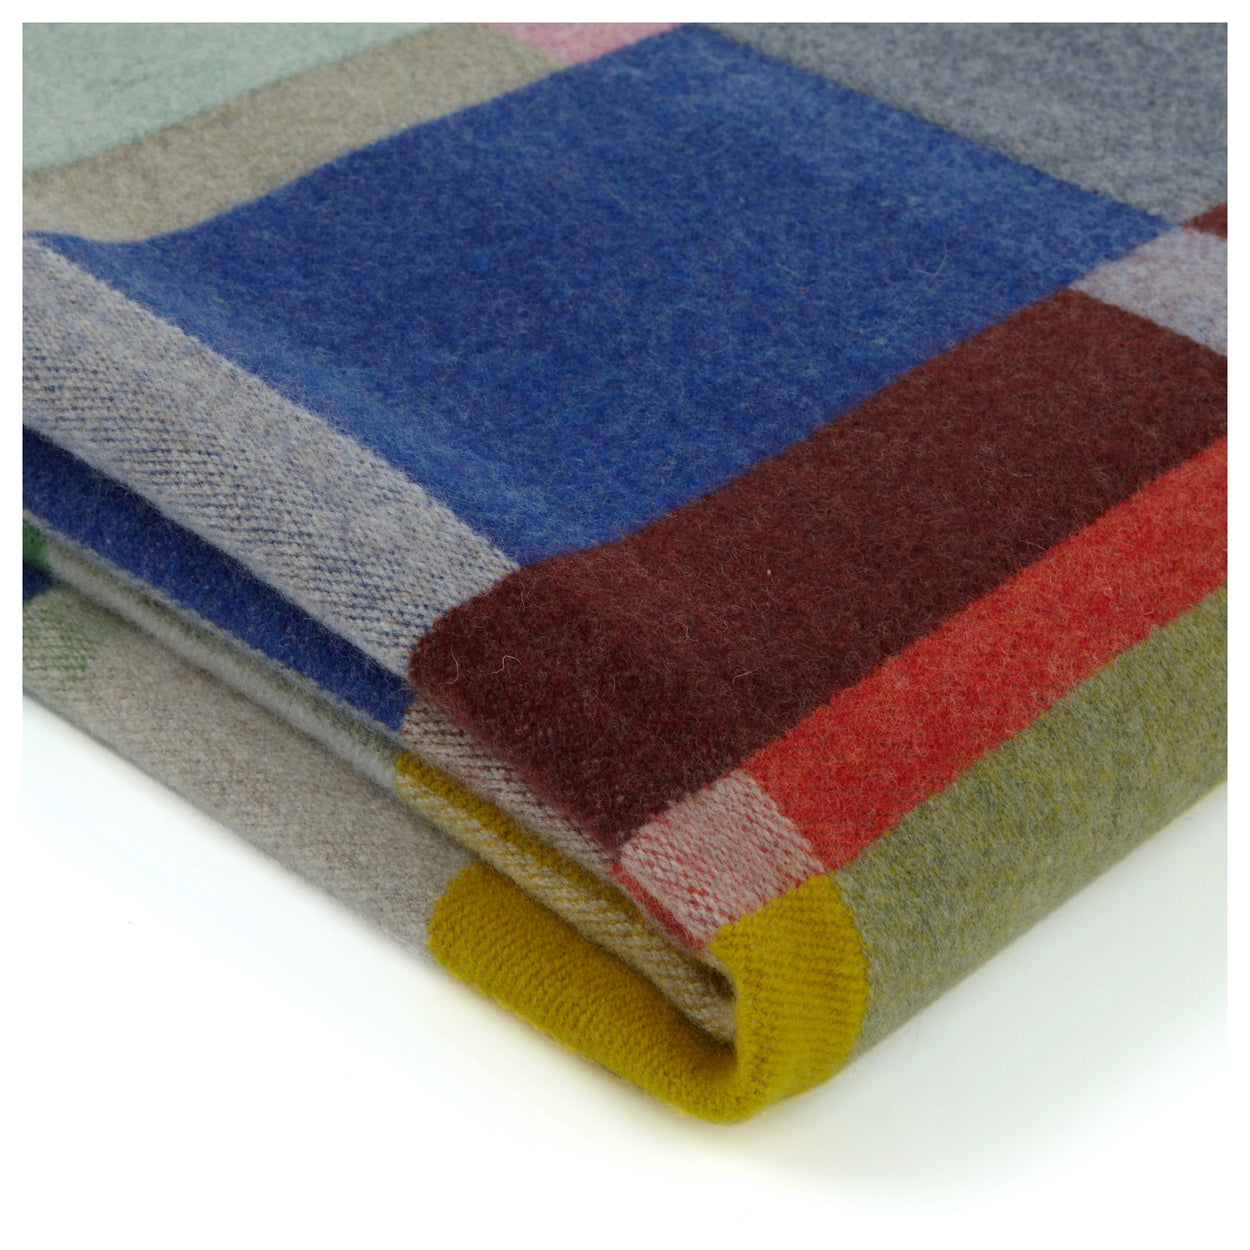 Large Wallace Sewell Lloyd Premium Australian Merino wool blanket folded closeup